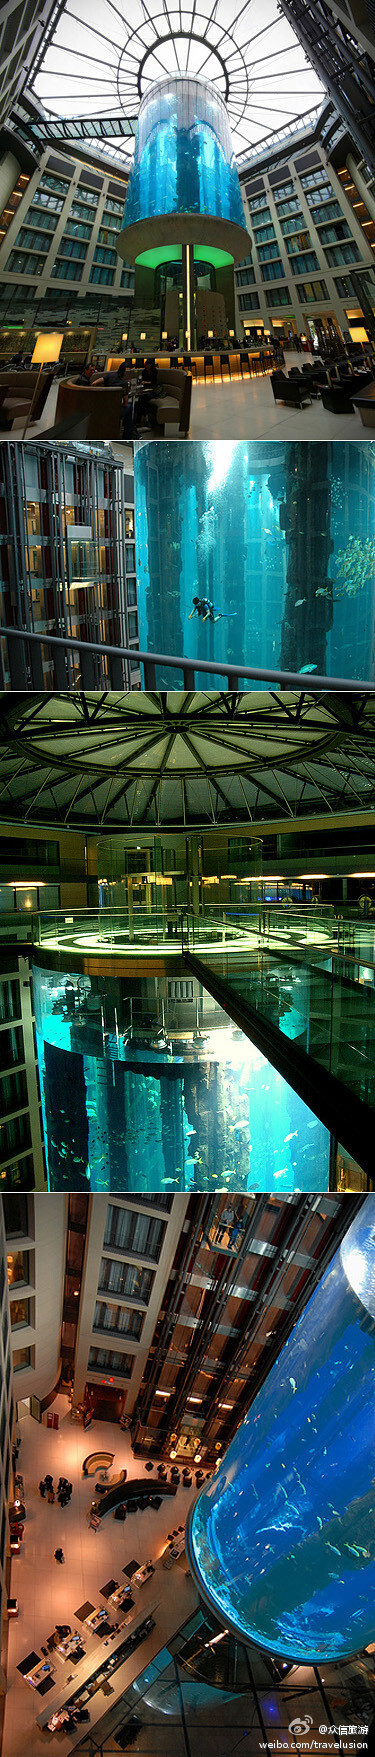 Radisson Blu酒店位于德国柏林，它的大堂里放置着世界上最大的圆柱形水族箱，高25米，直径11米，装有约1百万升海水，56个不同种类的大约2600条鱼生活在其中，并由专职潜水员饲养。水族箱中心设有电梯，游客可穿越水…